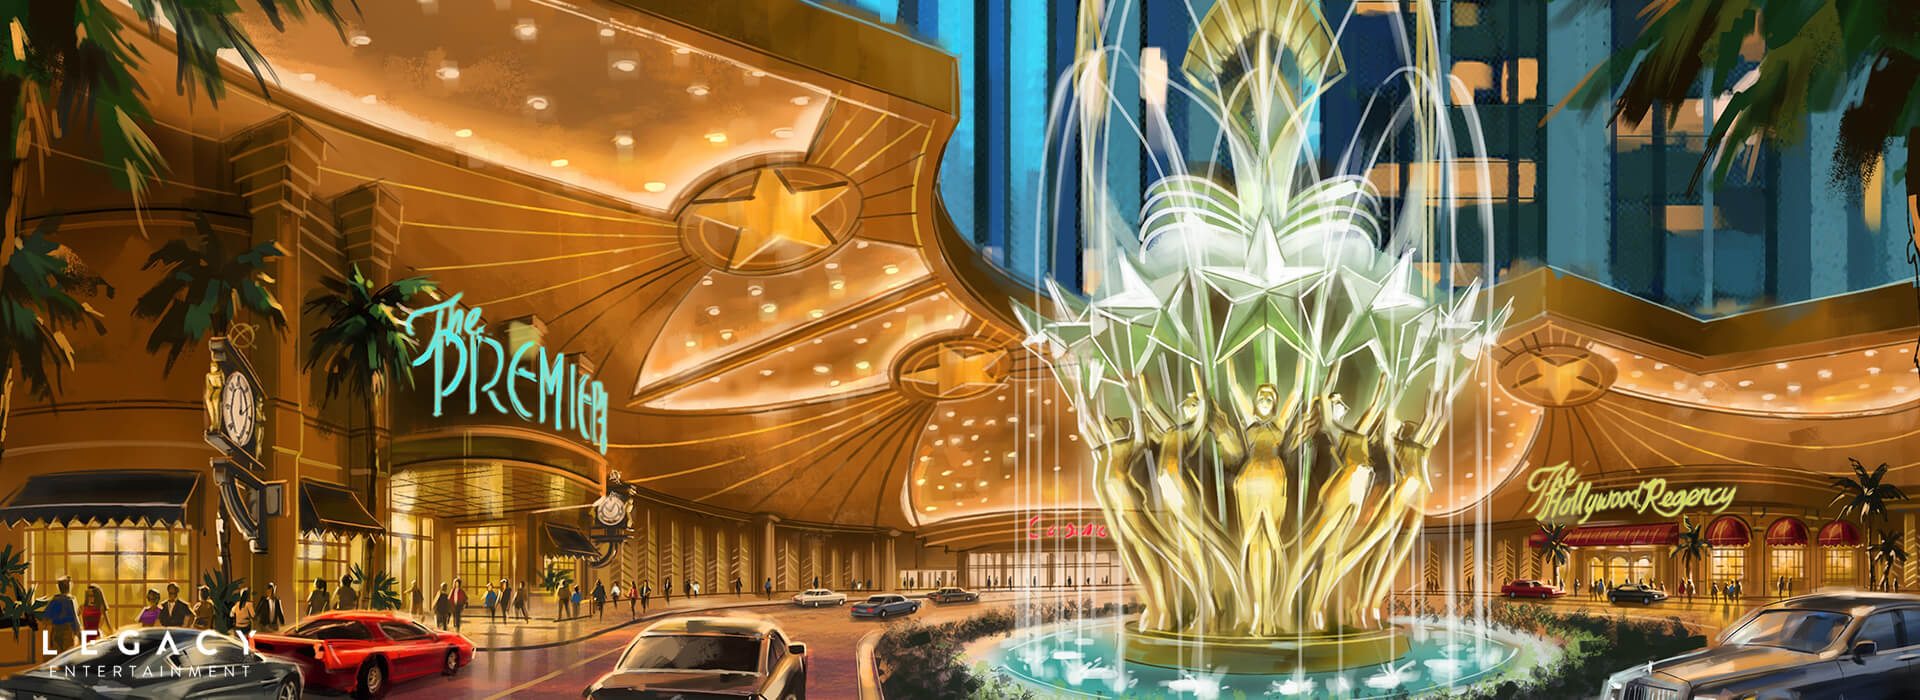 Macau_Studio_City_Casino_Resort_Hotel_Design_Legacy_Entertainment_30